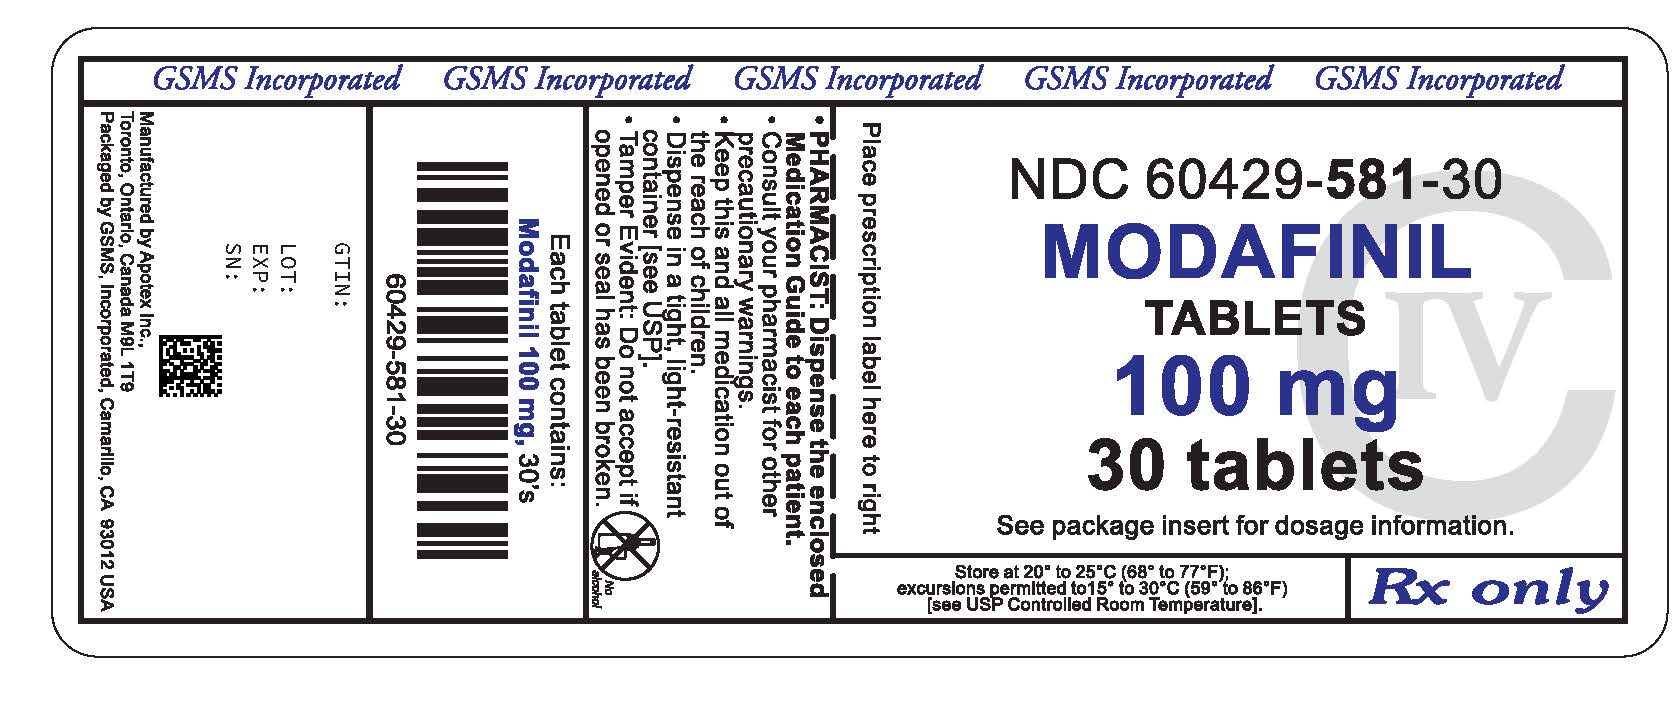 60429-581-30LB - MODAFINIL 100 MG TABLETS - CIV - REV JULY 2012 REV 5 PMG JULY 2012.jpg